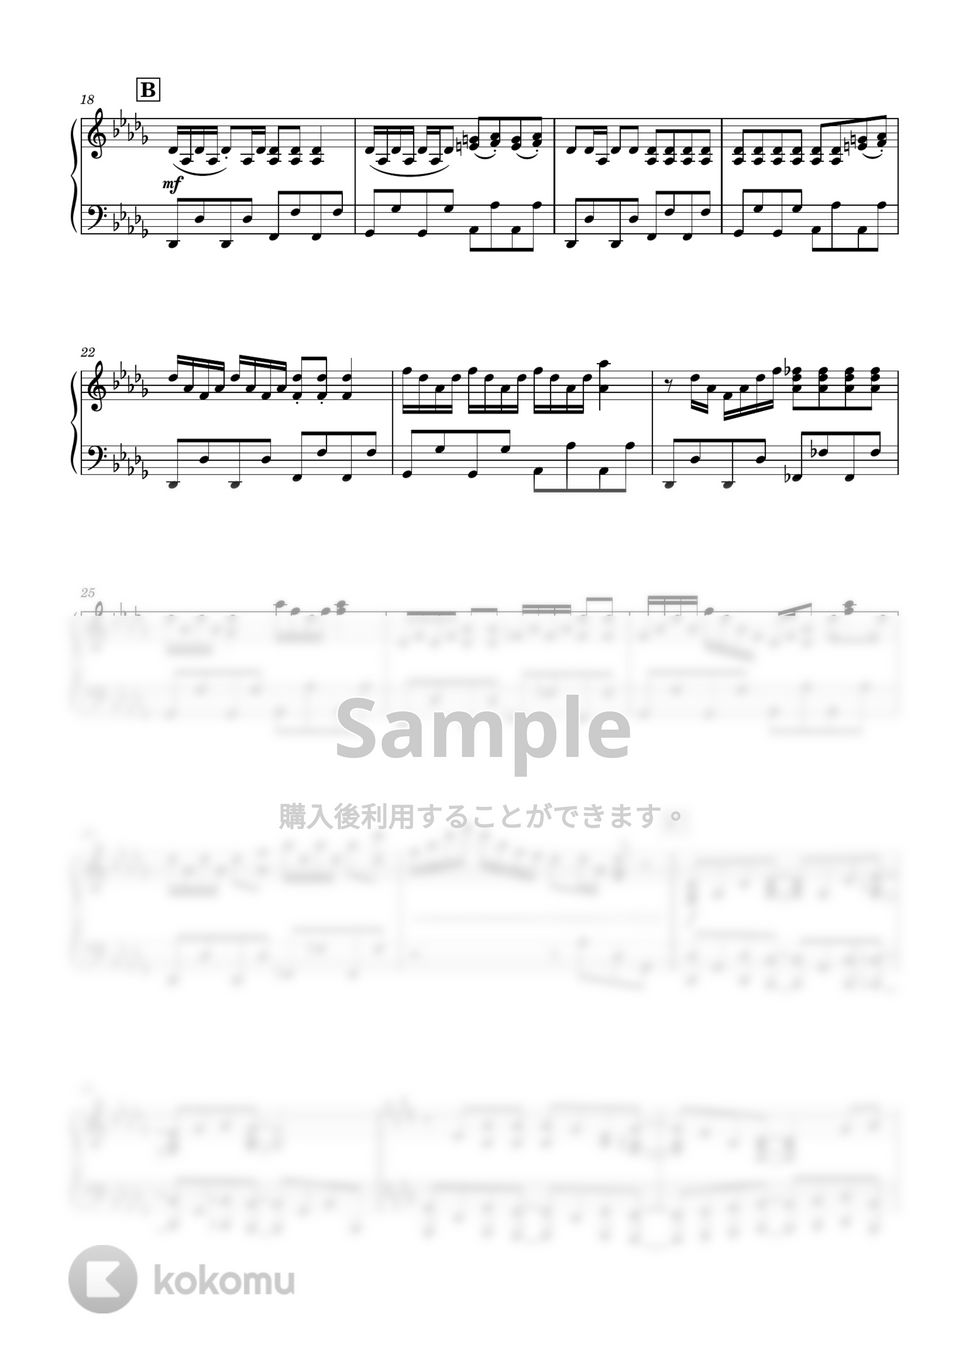 gal'up - うまぴょい伝説 (ピアノソロ上級) by Niisan